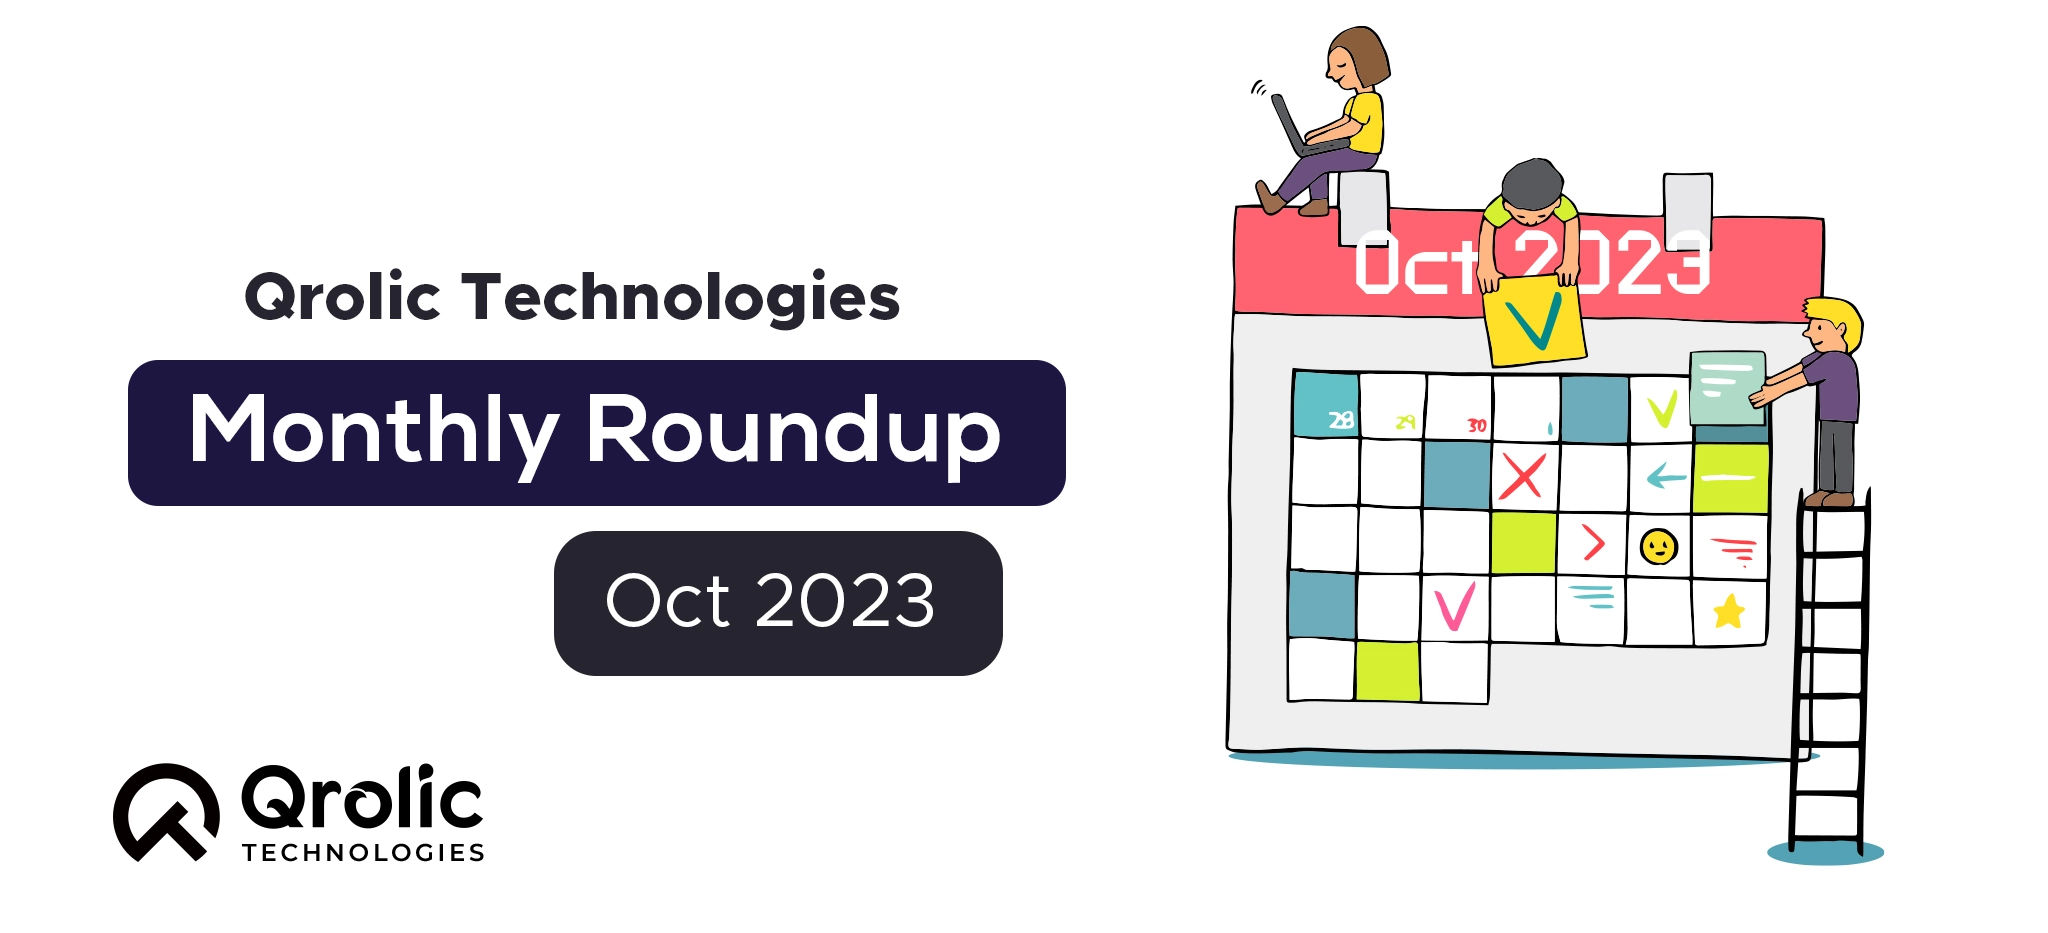 Qrolic Technologies Monthly Roundup – Oct 2023